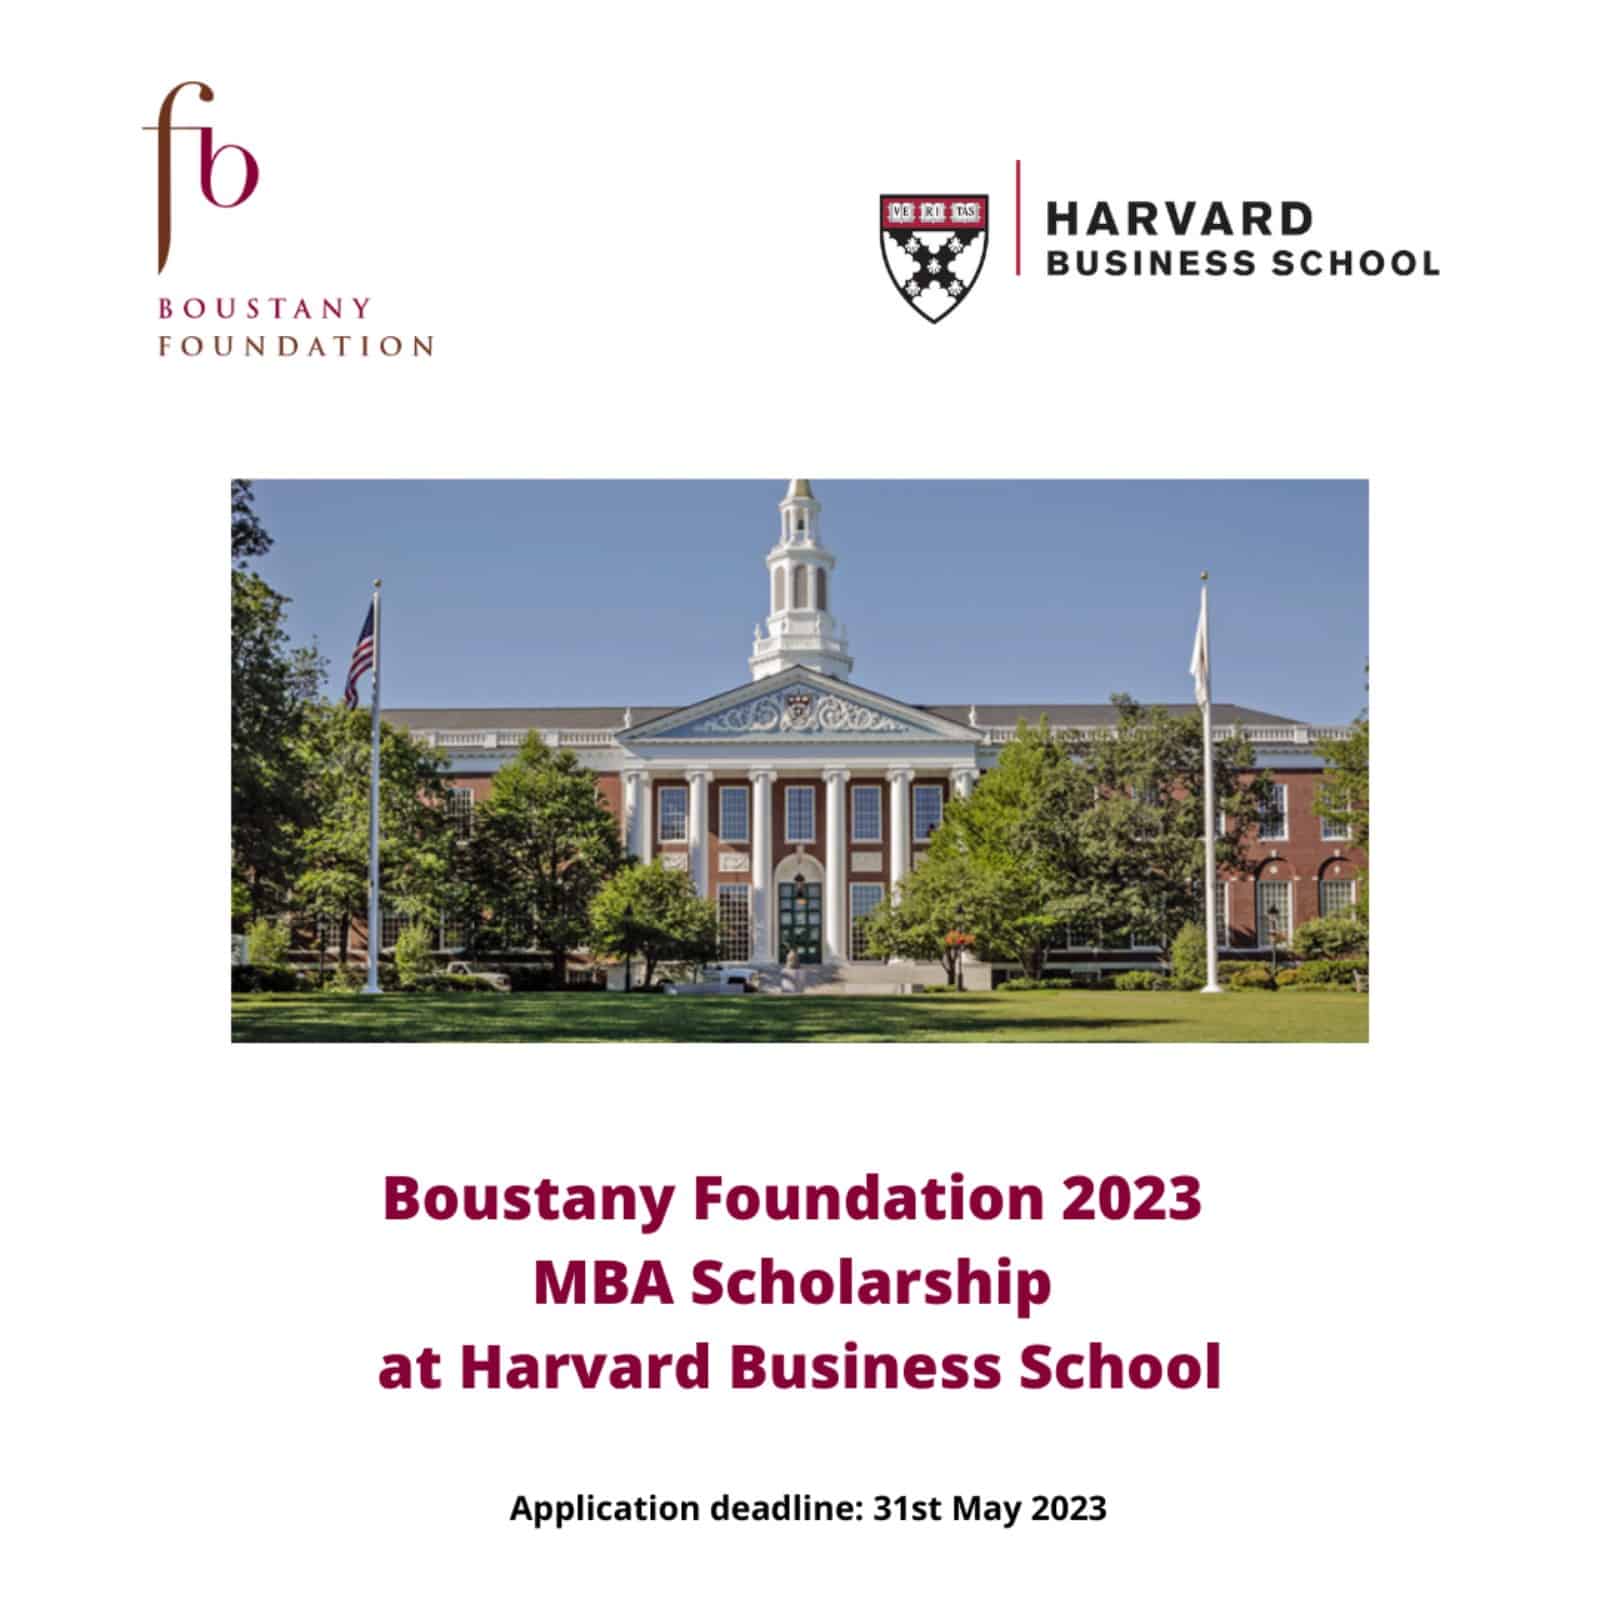 Boustany Foundation MBA Scholarship at Harvard Business School